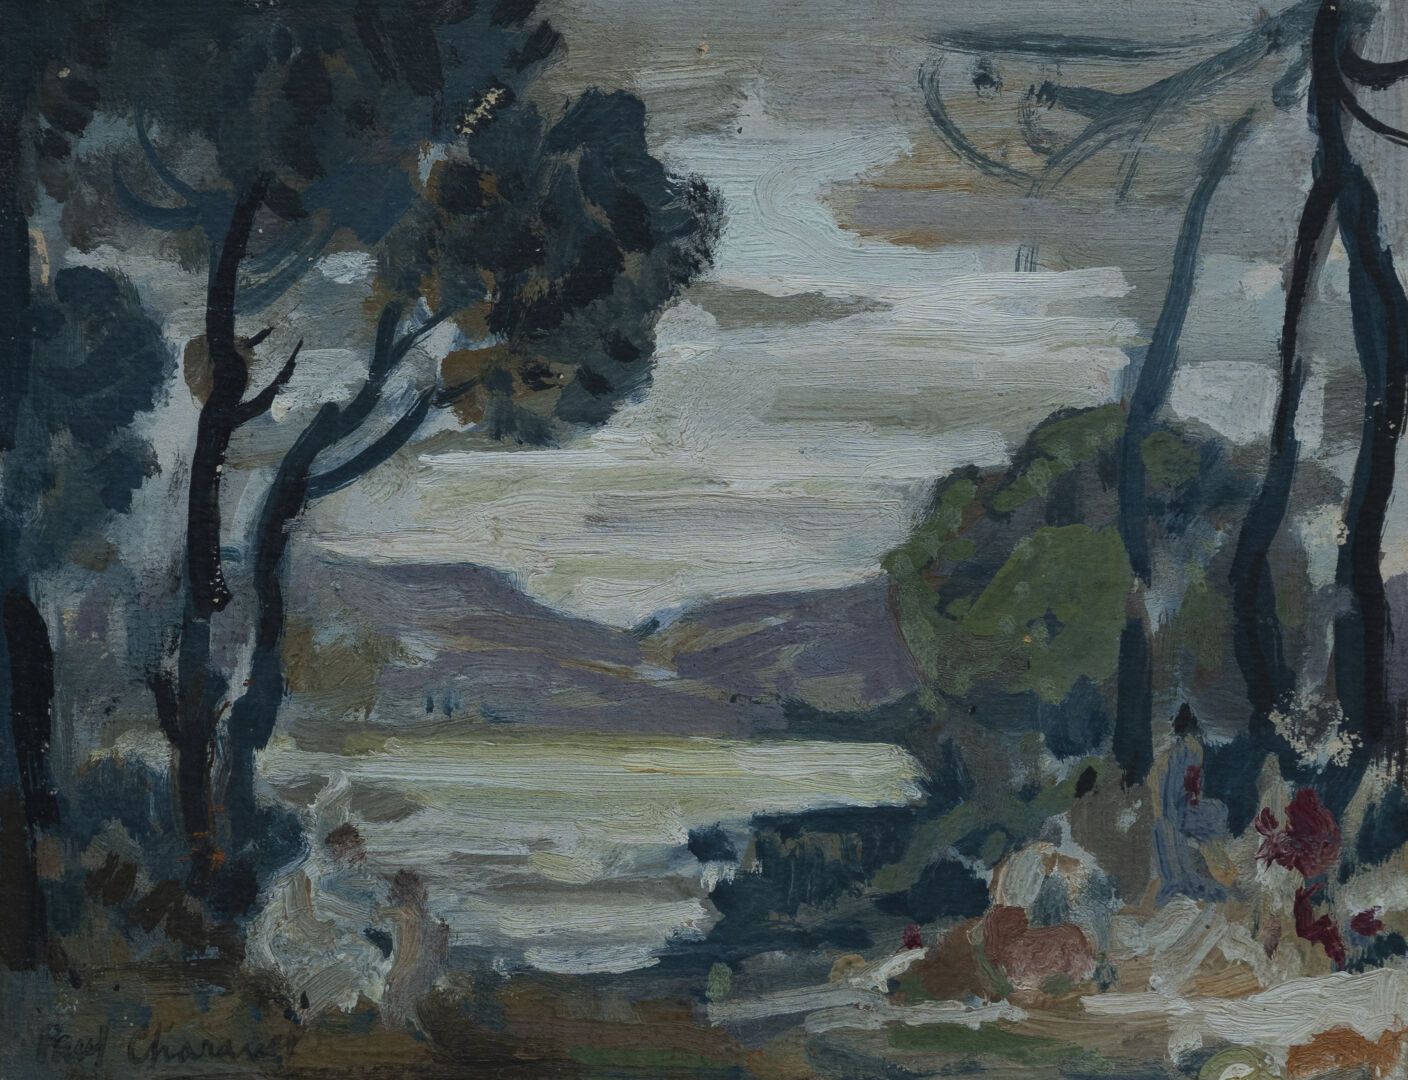 Null Paul CHARAVEL (1877-1961)

湖泊景观中的动画场景

布面油画，左下角有签名

16 x 20厘米